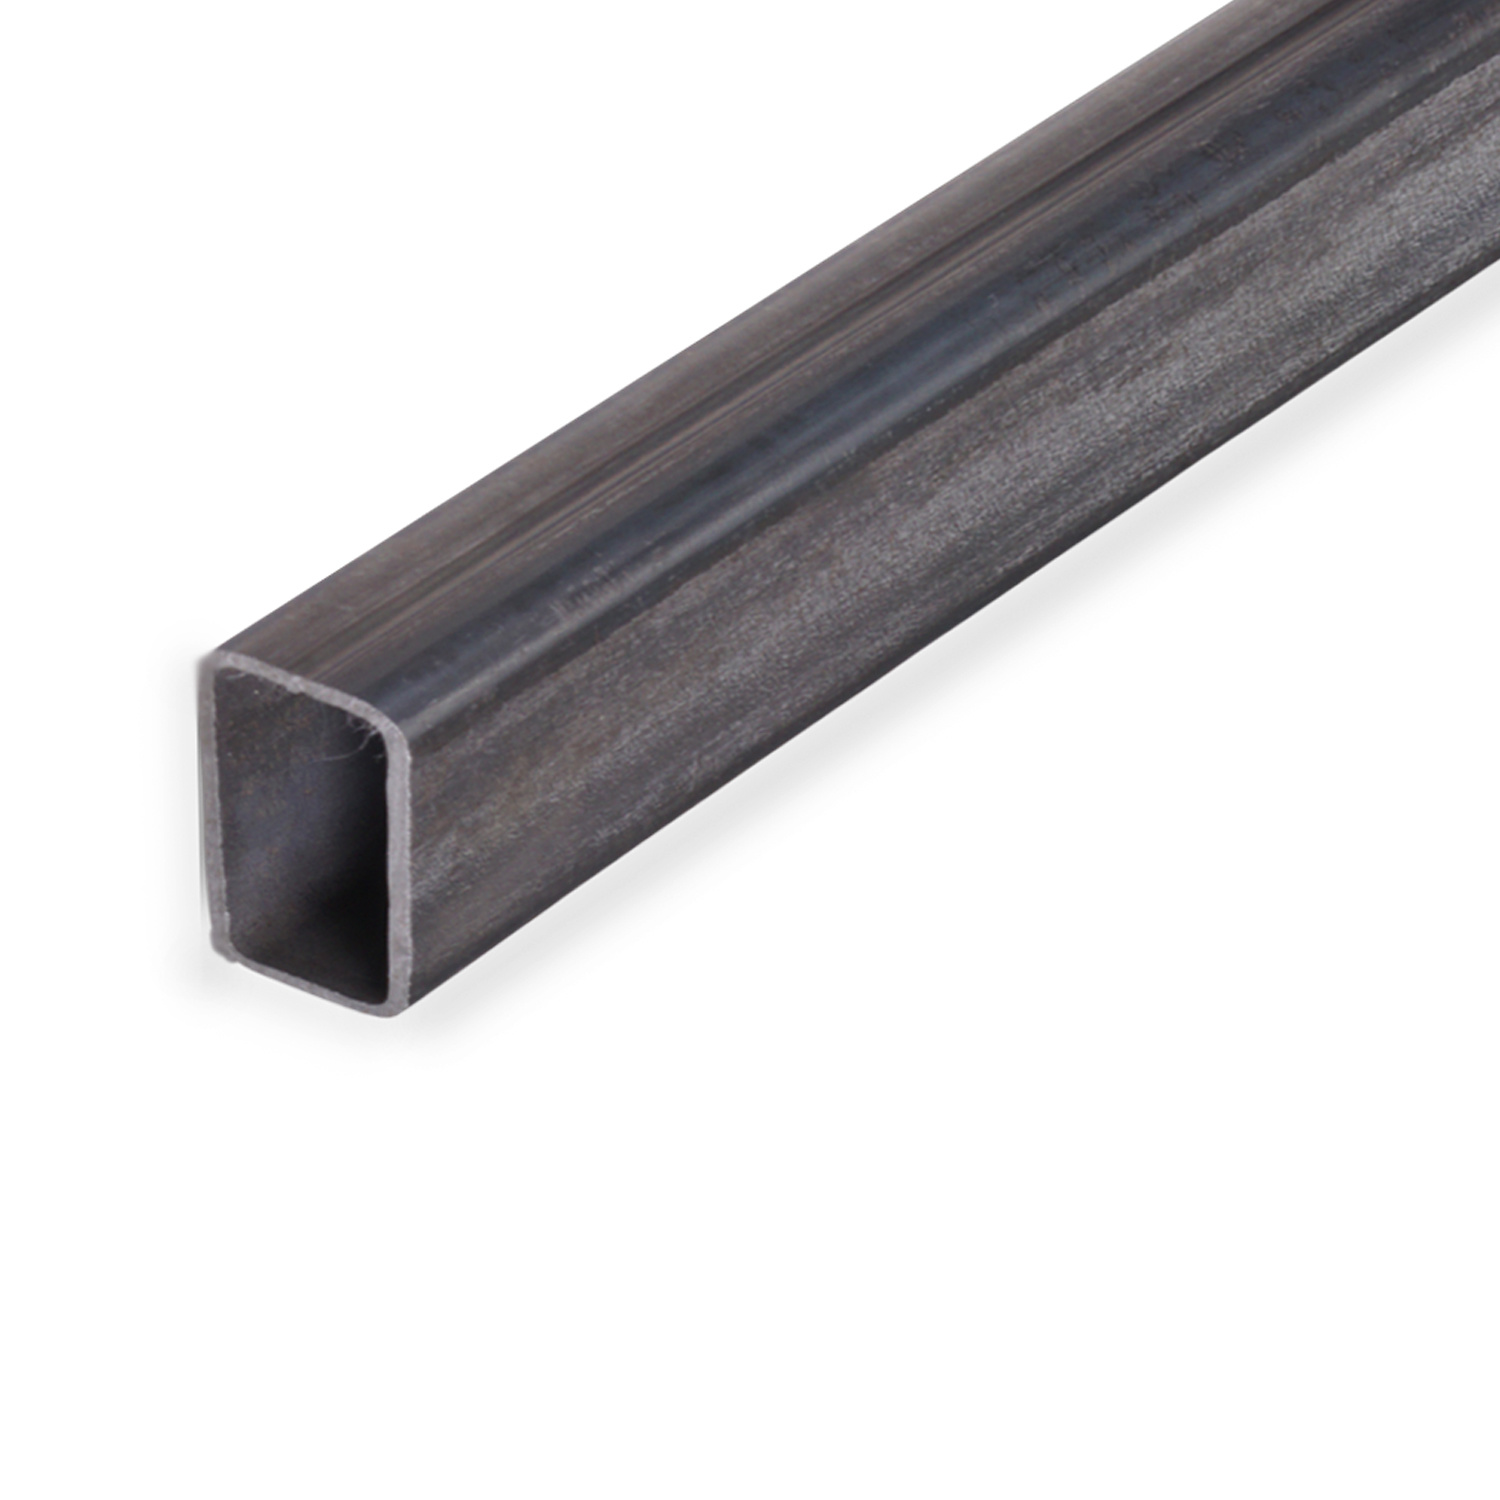  Koker staal - rechthoekige buis kokerprofiel KGV staal - S235JR - 50x40x3 MM